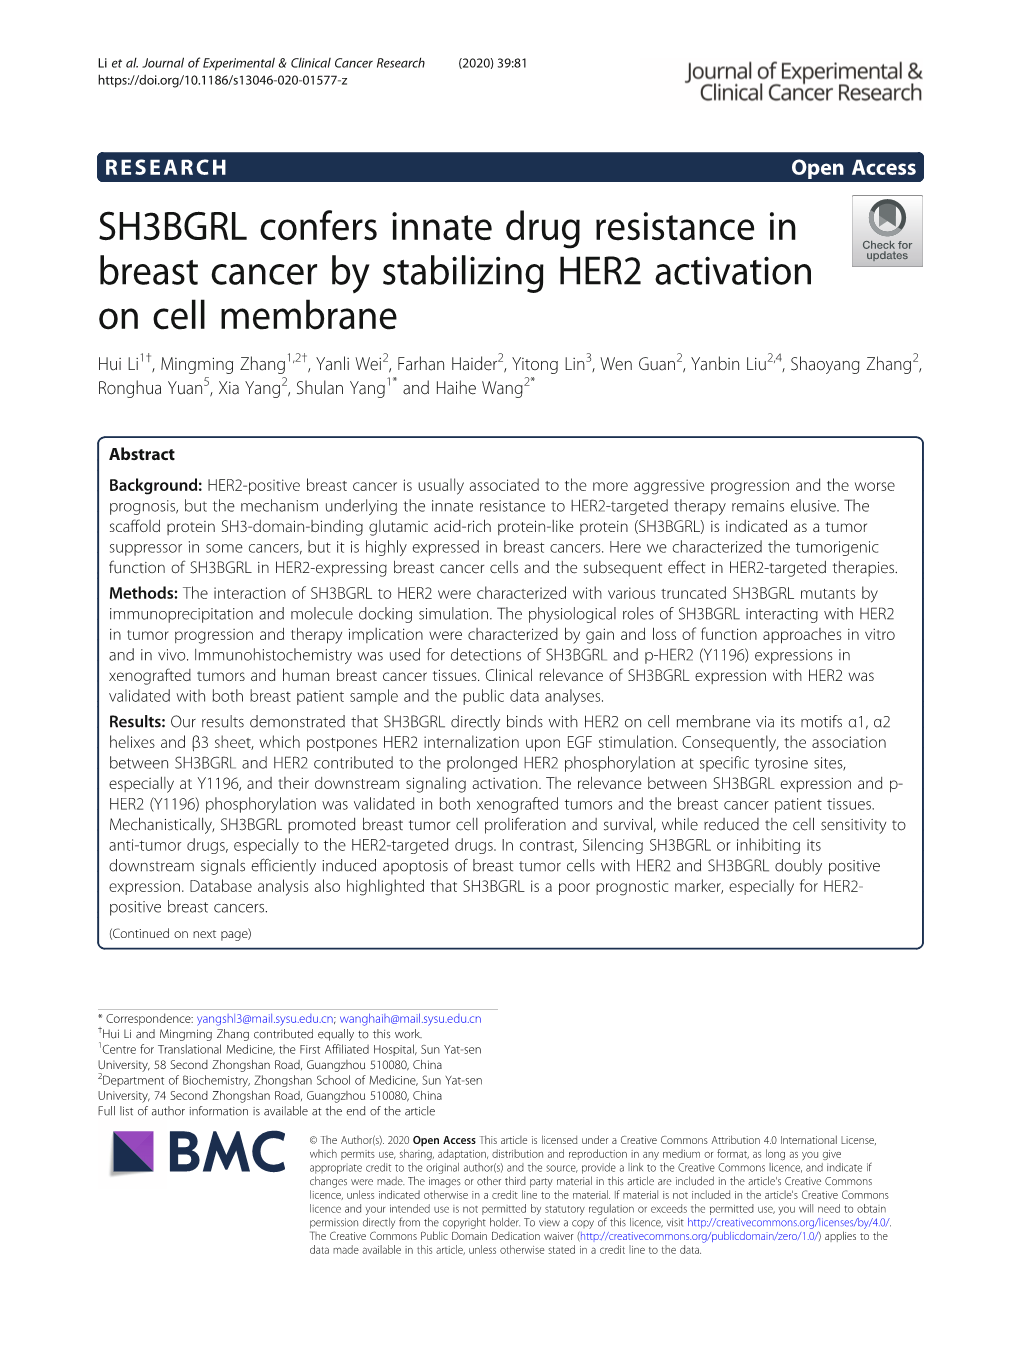 SH3BGRL Confers Innate Drug Resistance in Breast Cancer By